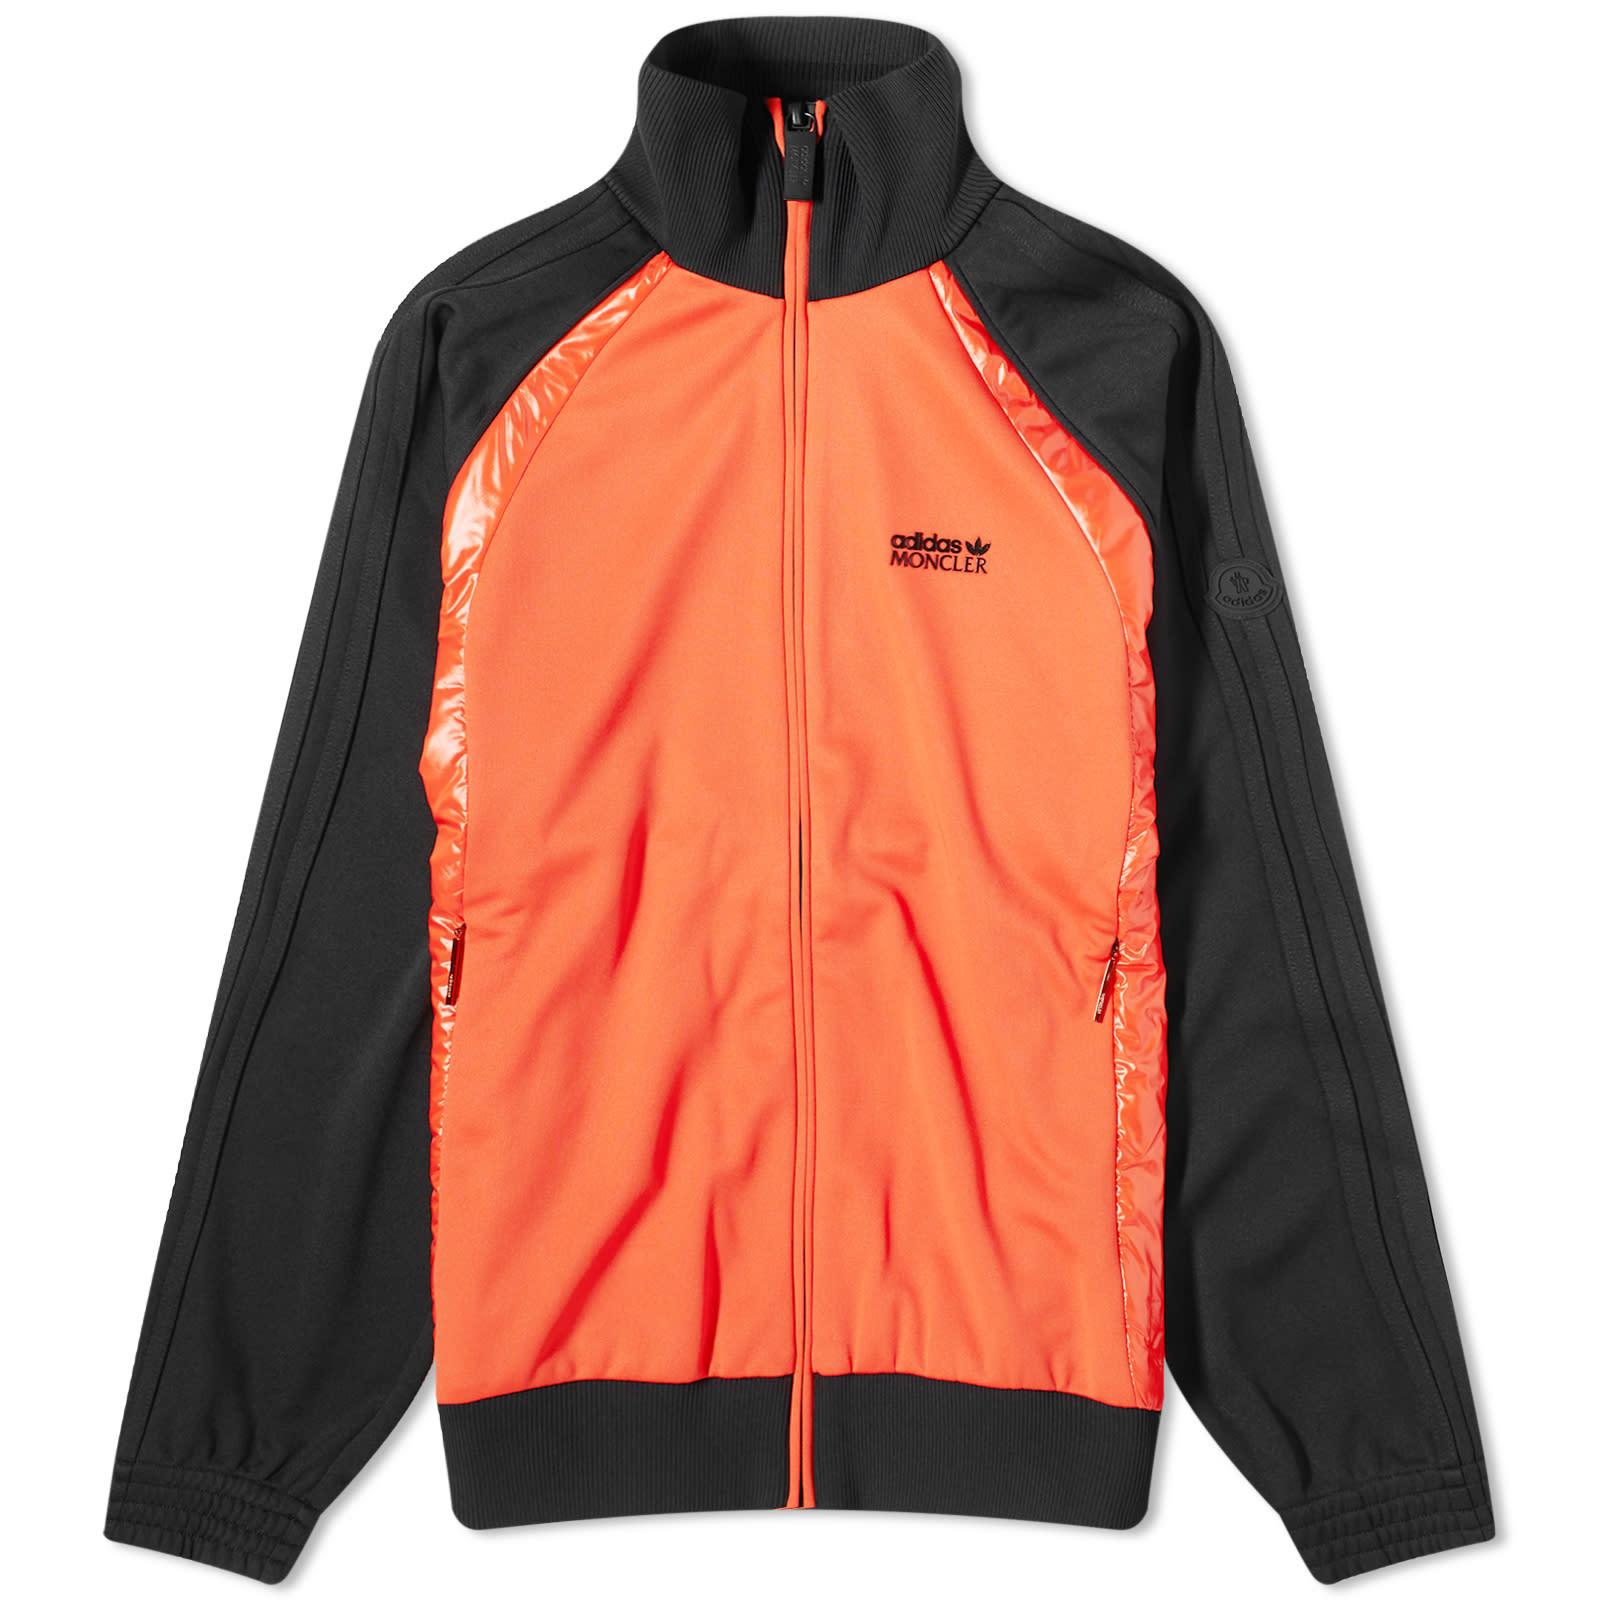 Moncler X Adidas Originals Zip Up Knit Track Jacket in Orange for